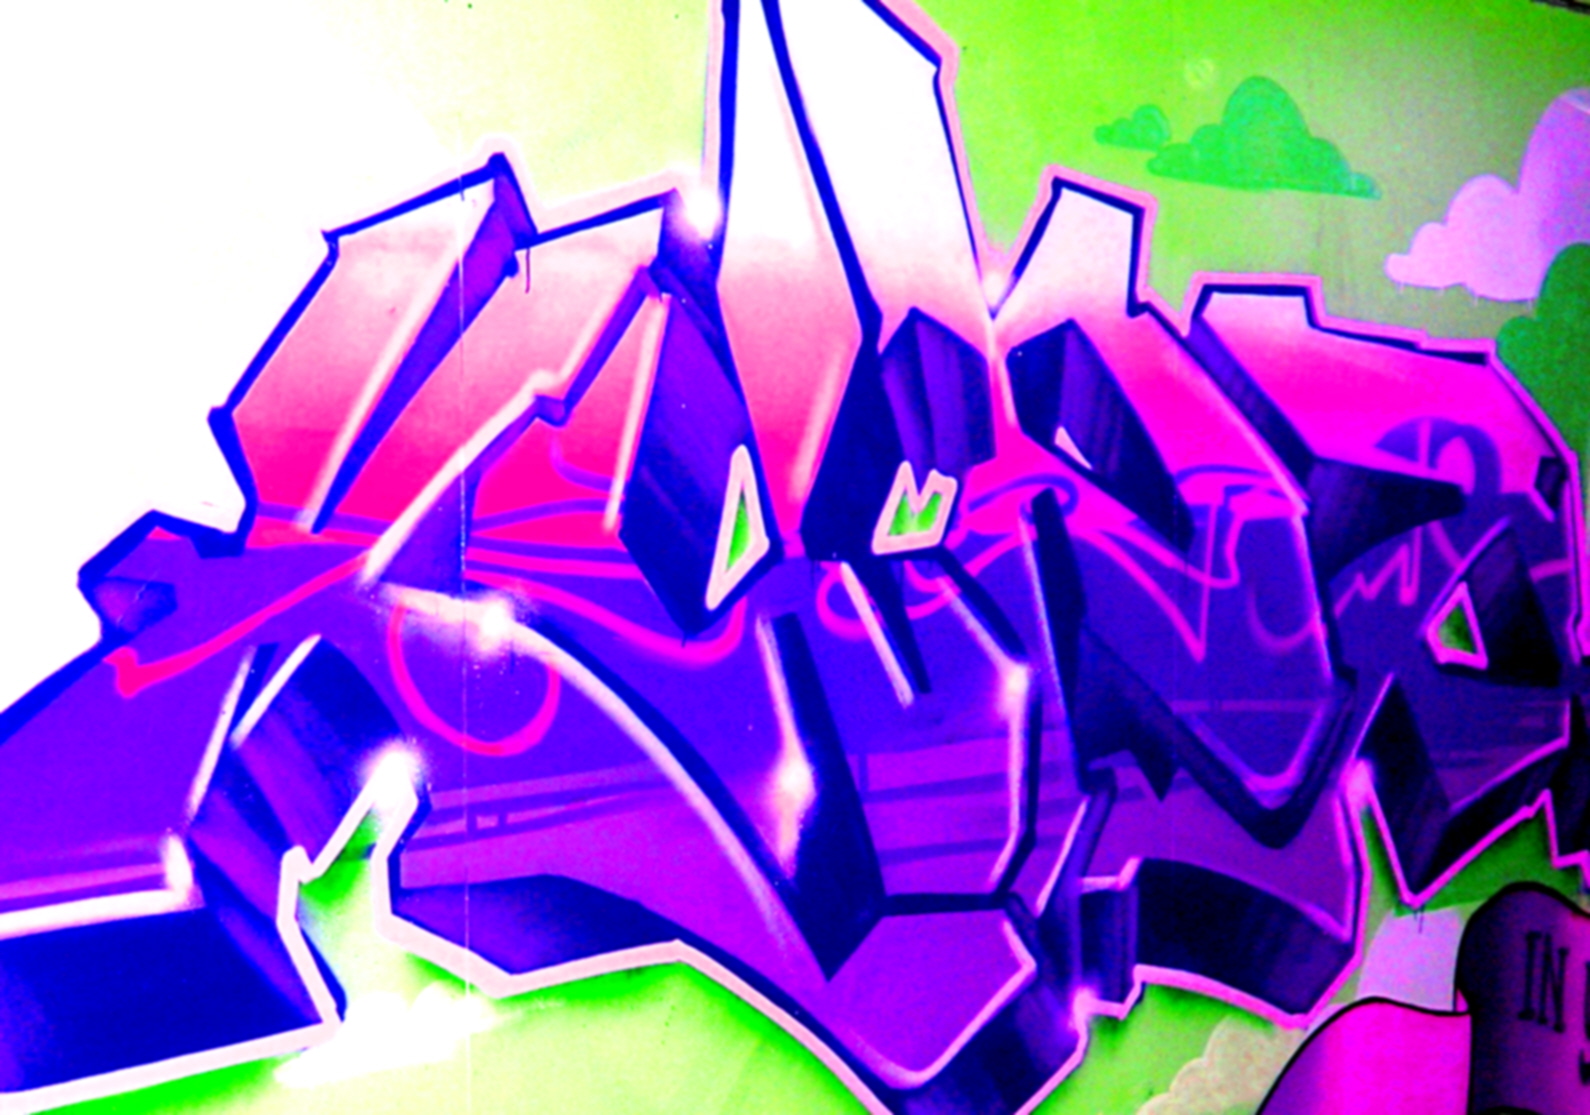 Graffiti pics And fontmystu: Cool Graffiti Wallpaper Best Designs for